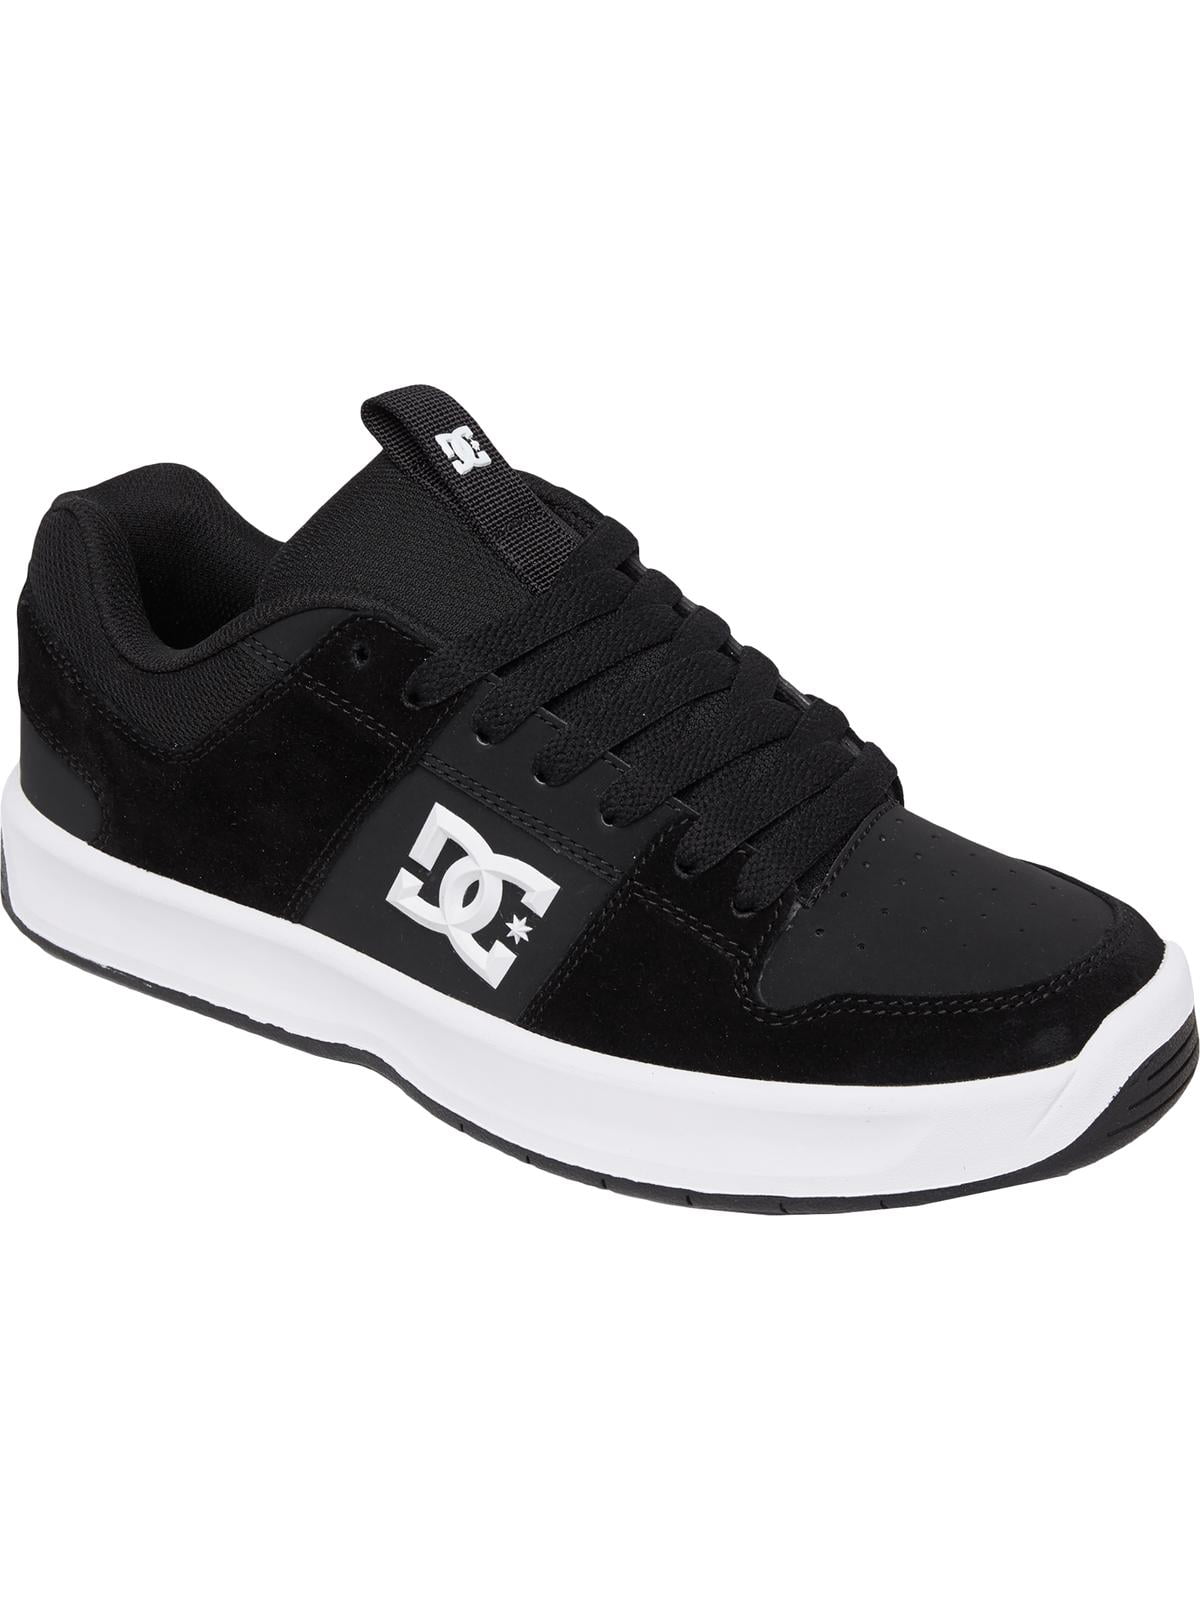 bkw DC Shoes Men's Lynx OG Skate Low Top Sneaker Shoes Black/White Footwear...